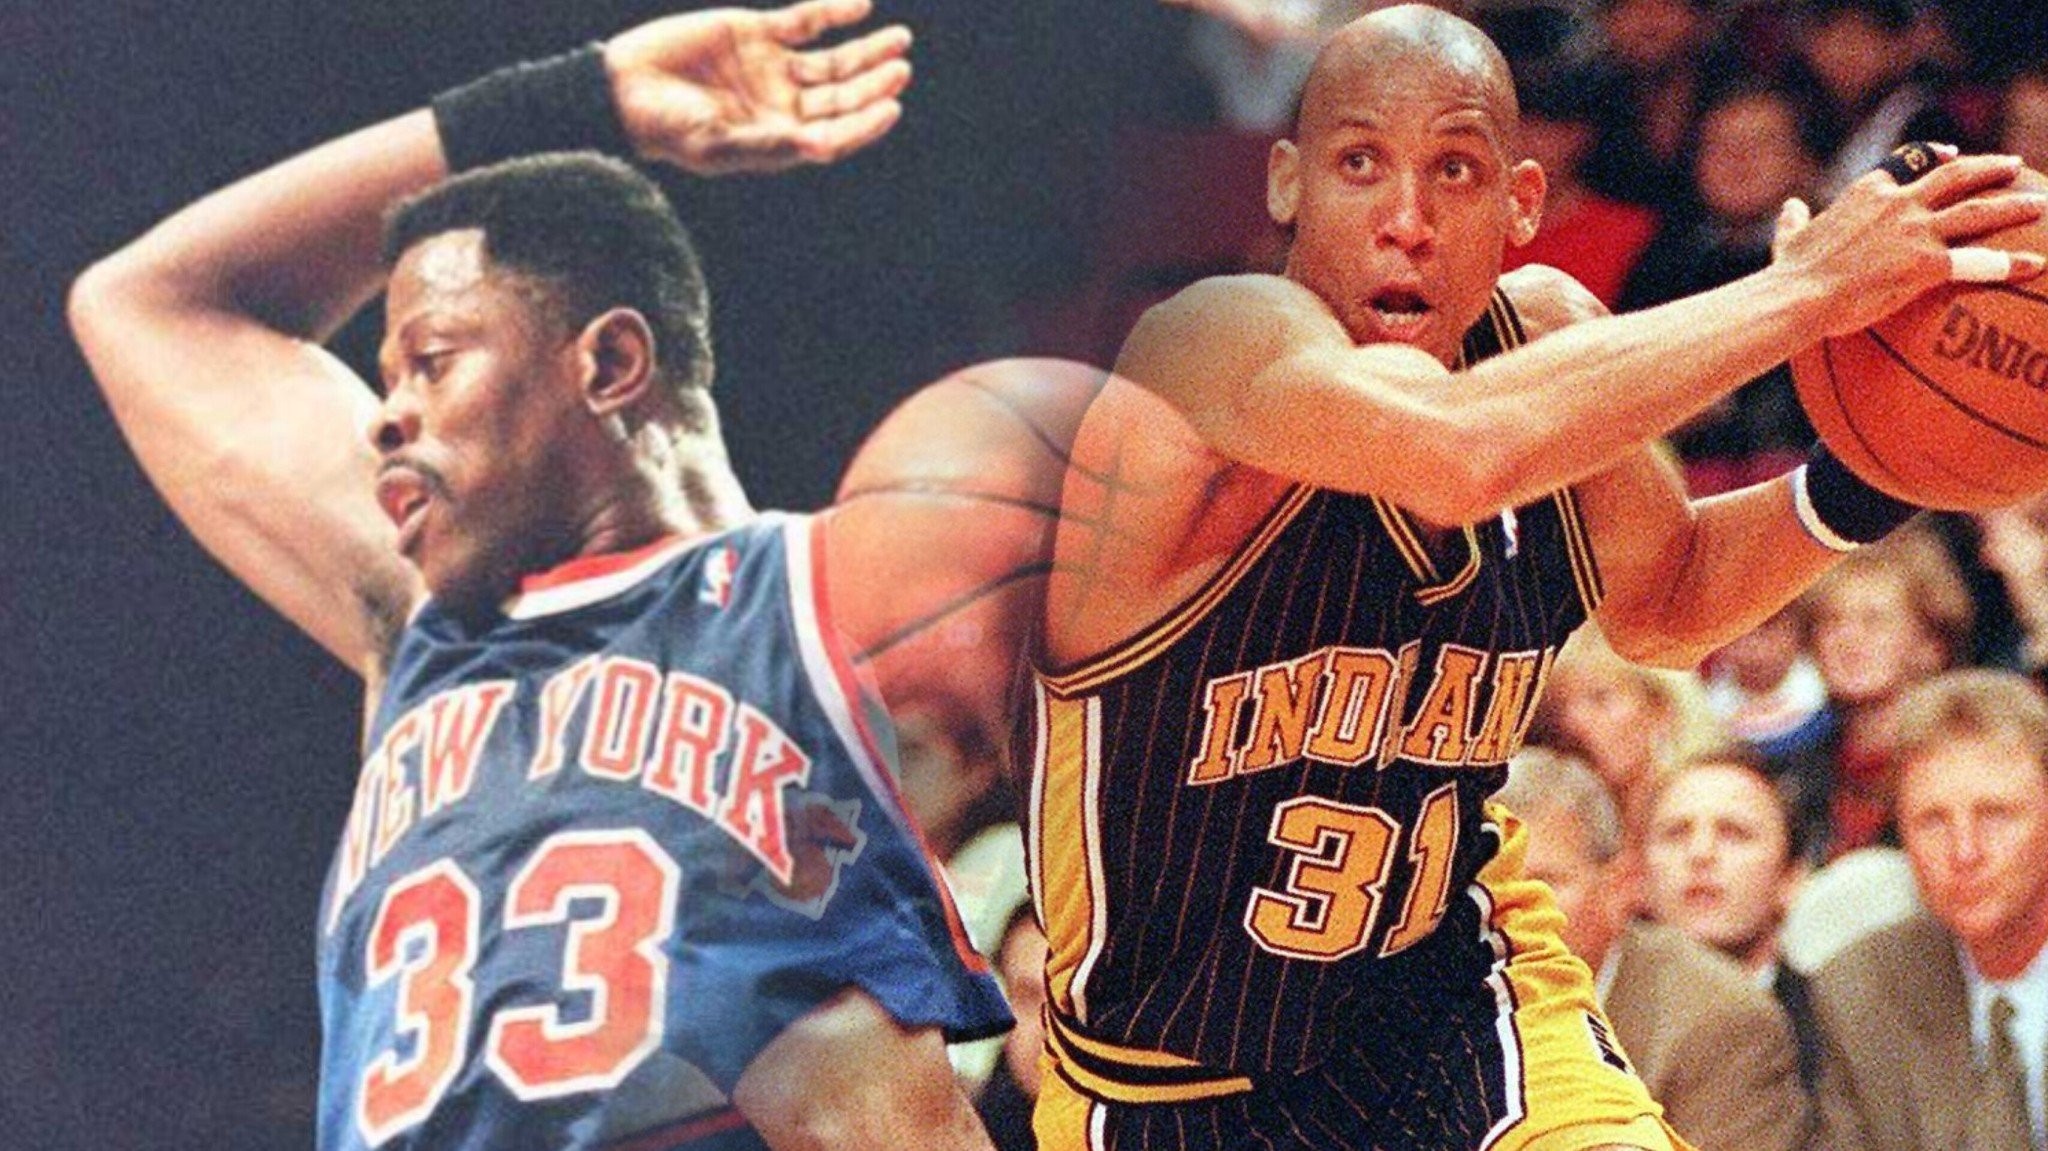 NBA Playoffs: Το Ιντιάνα Πέισερς - Νιου Γιορκ Νικς αναβιώνει την έχθρα των 90s [vids]